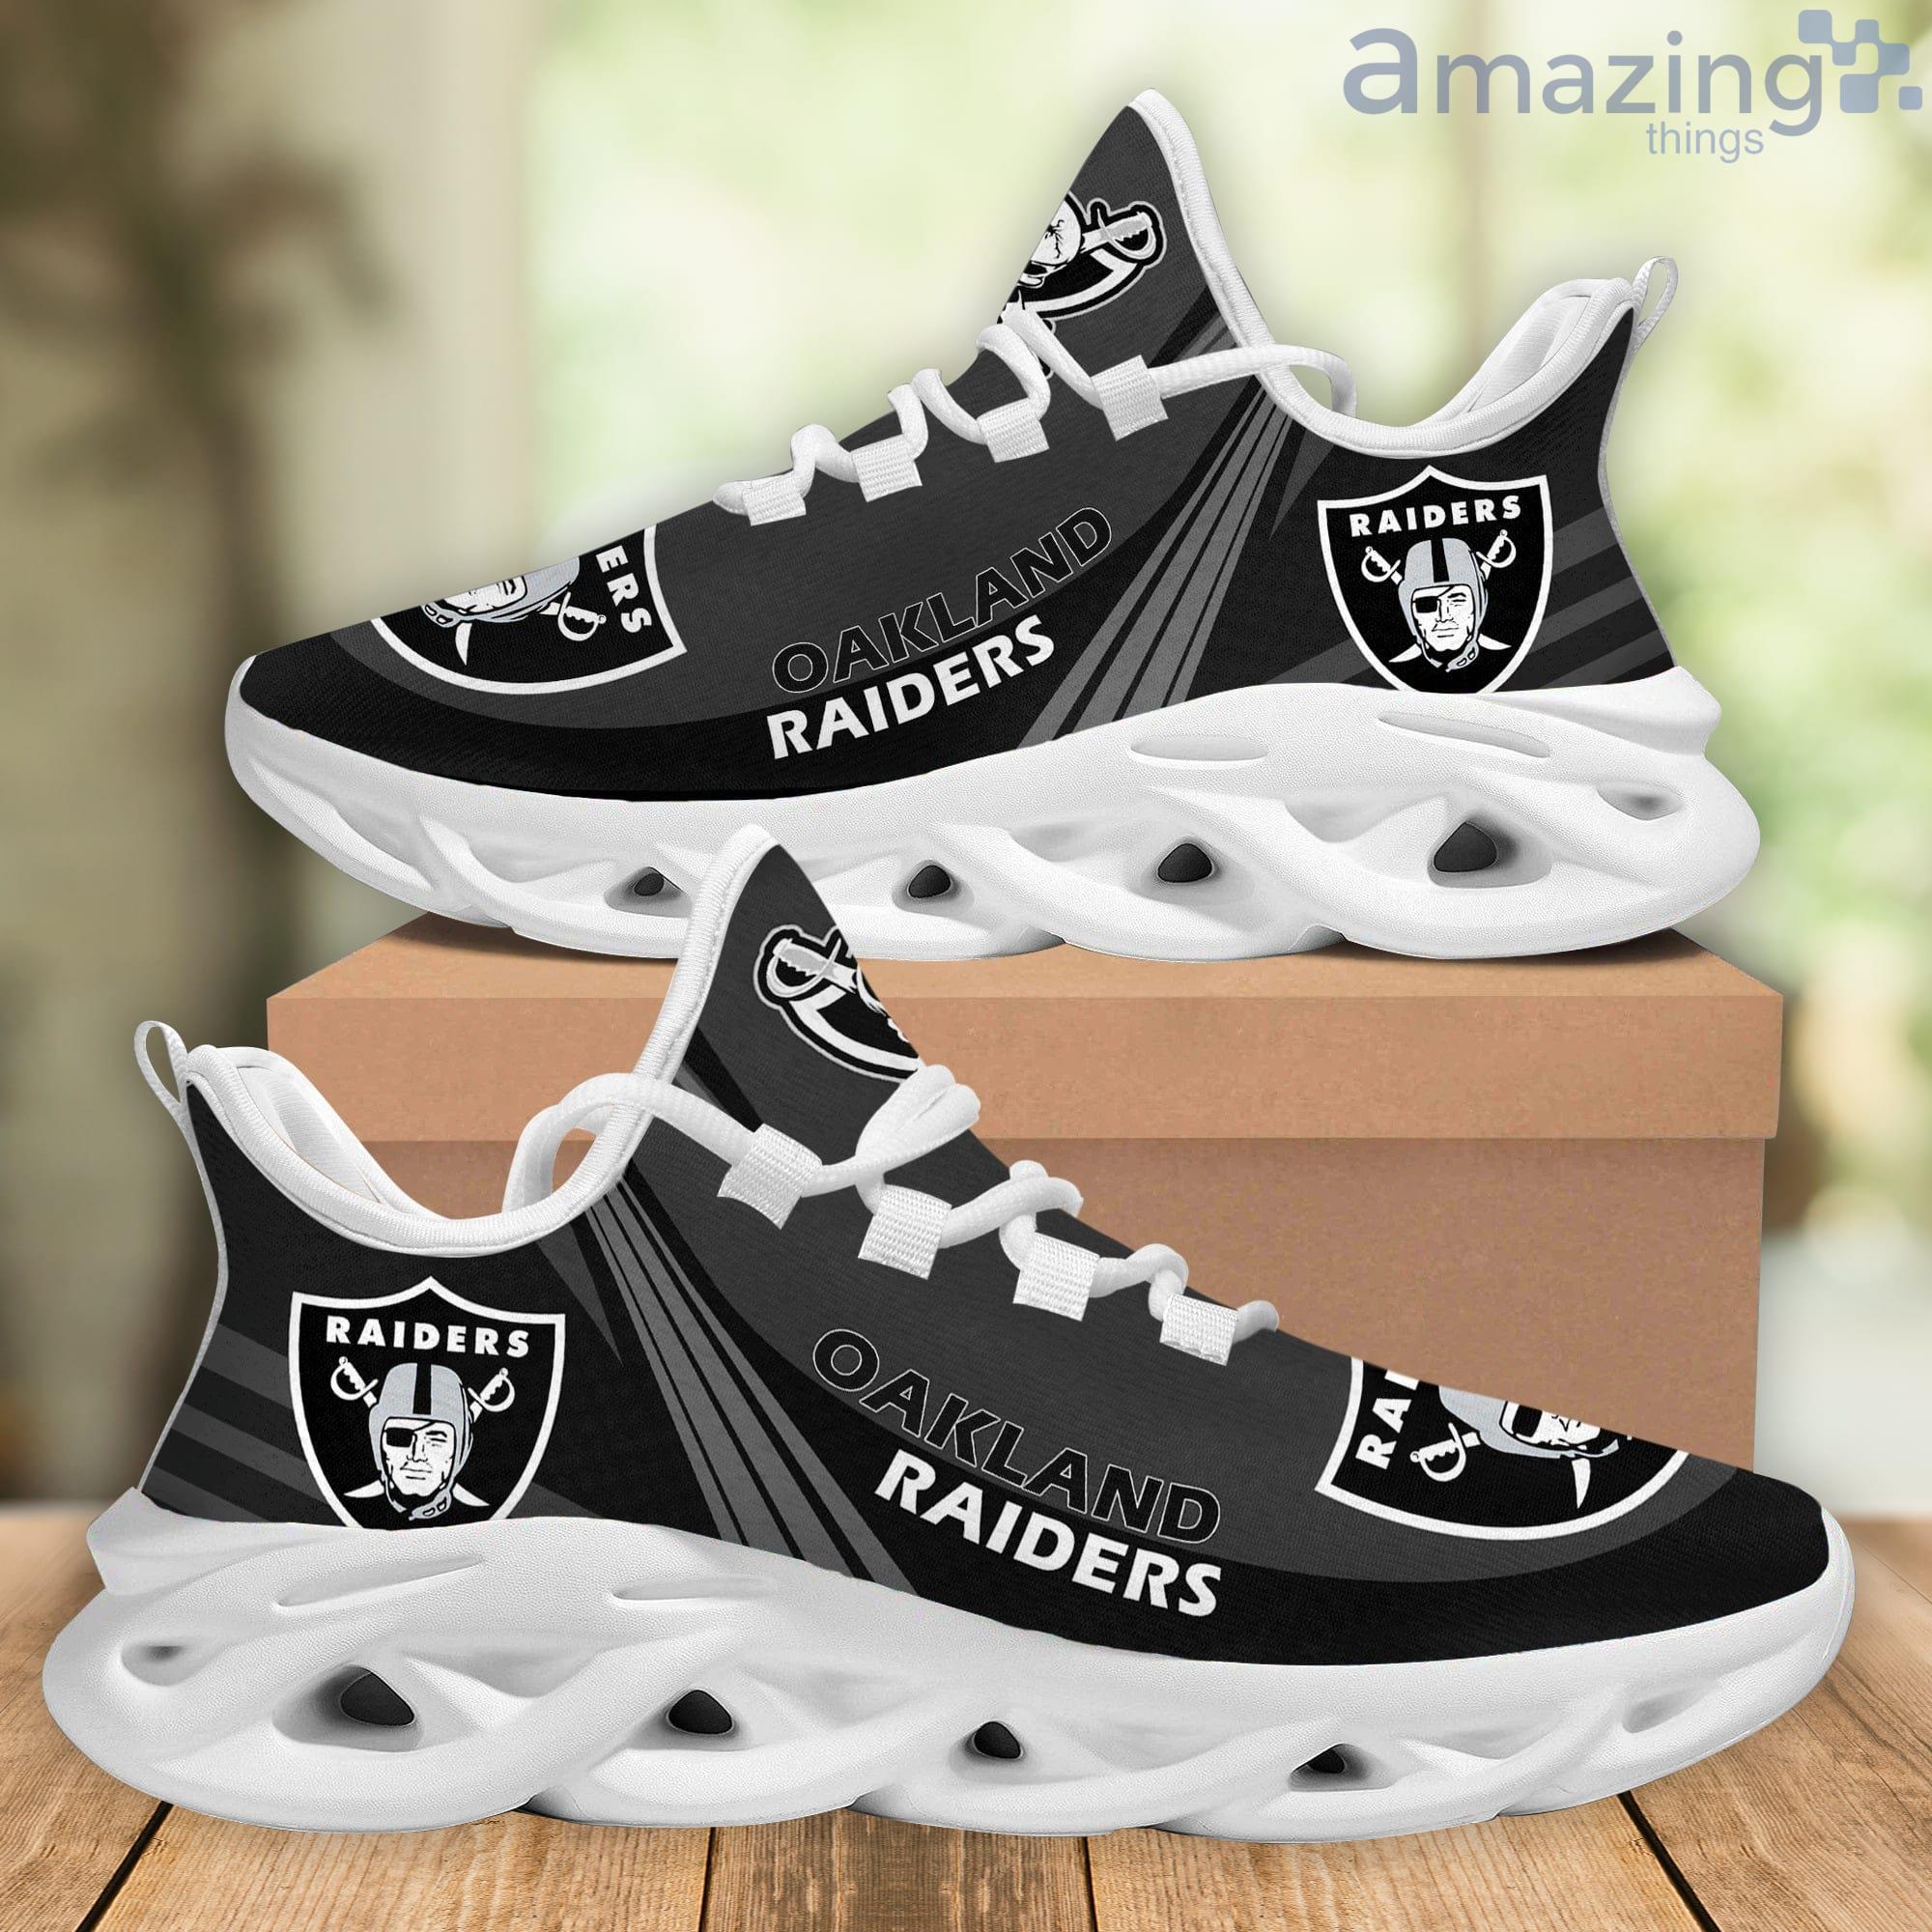 Raider Nike's  Raiders, Oakland raiders fans, Oakland raiders shoes